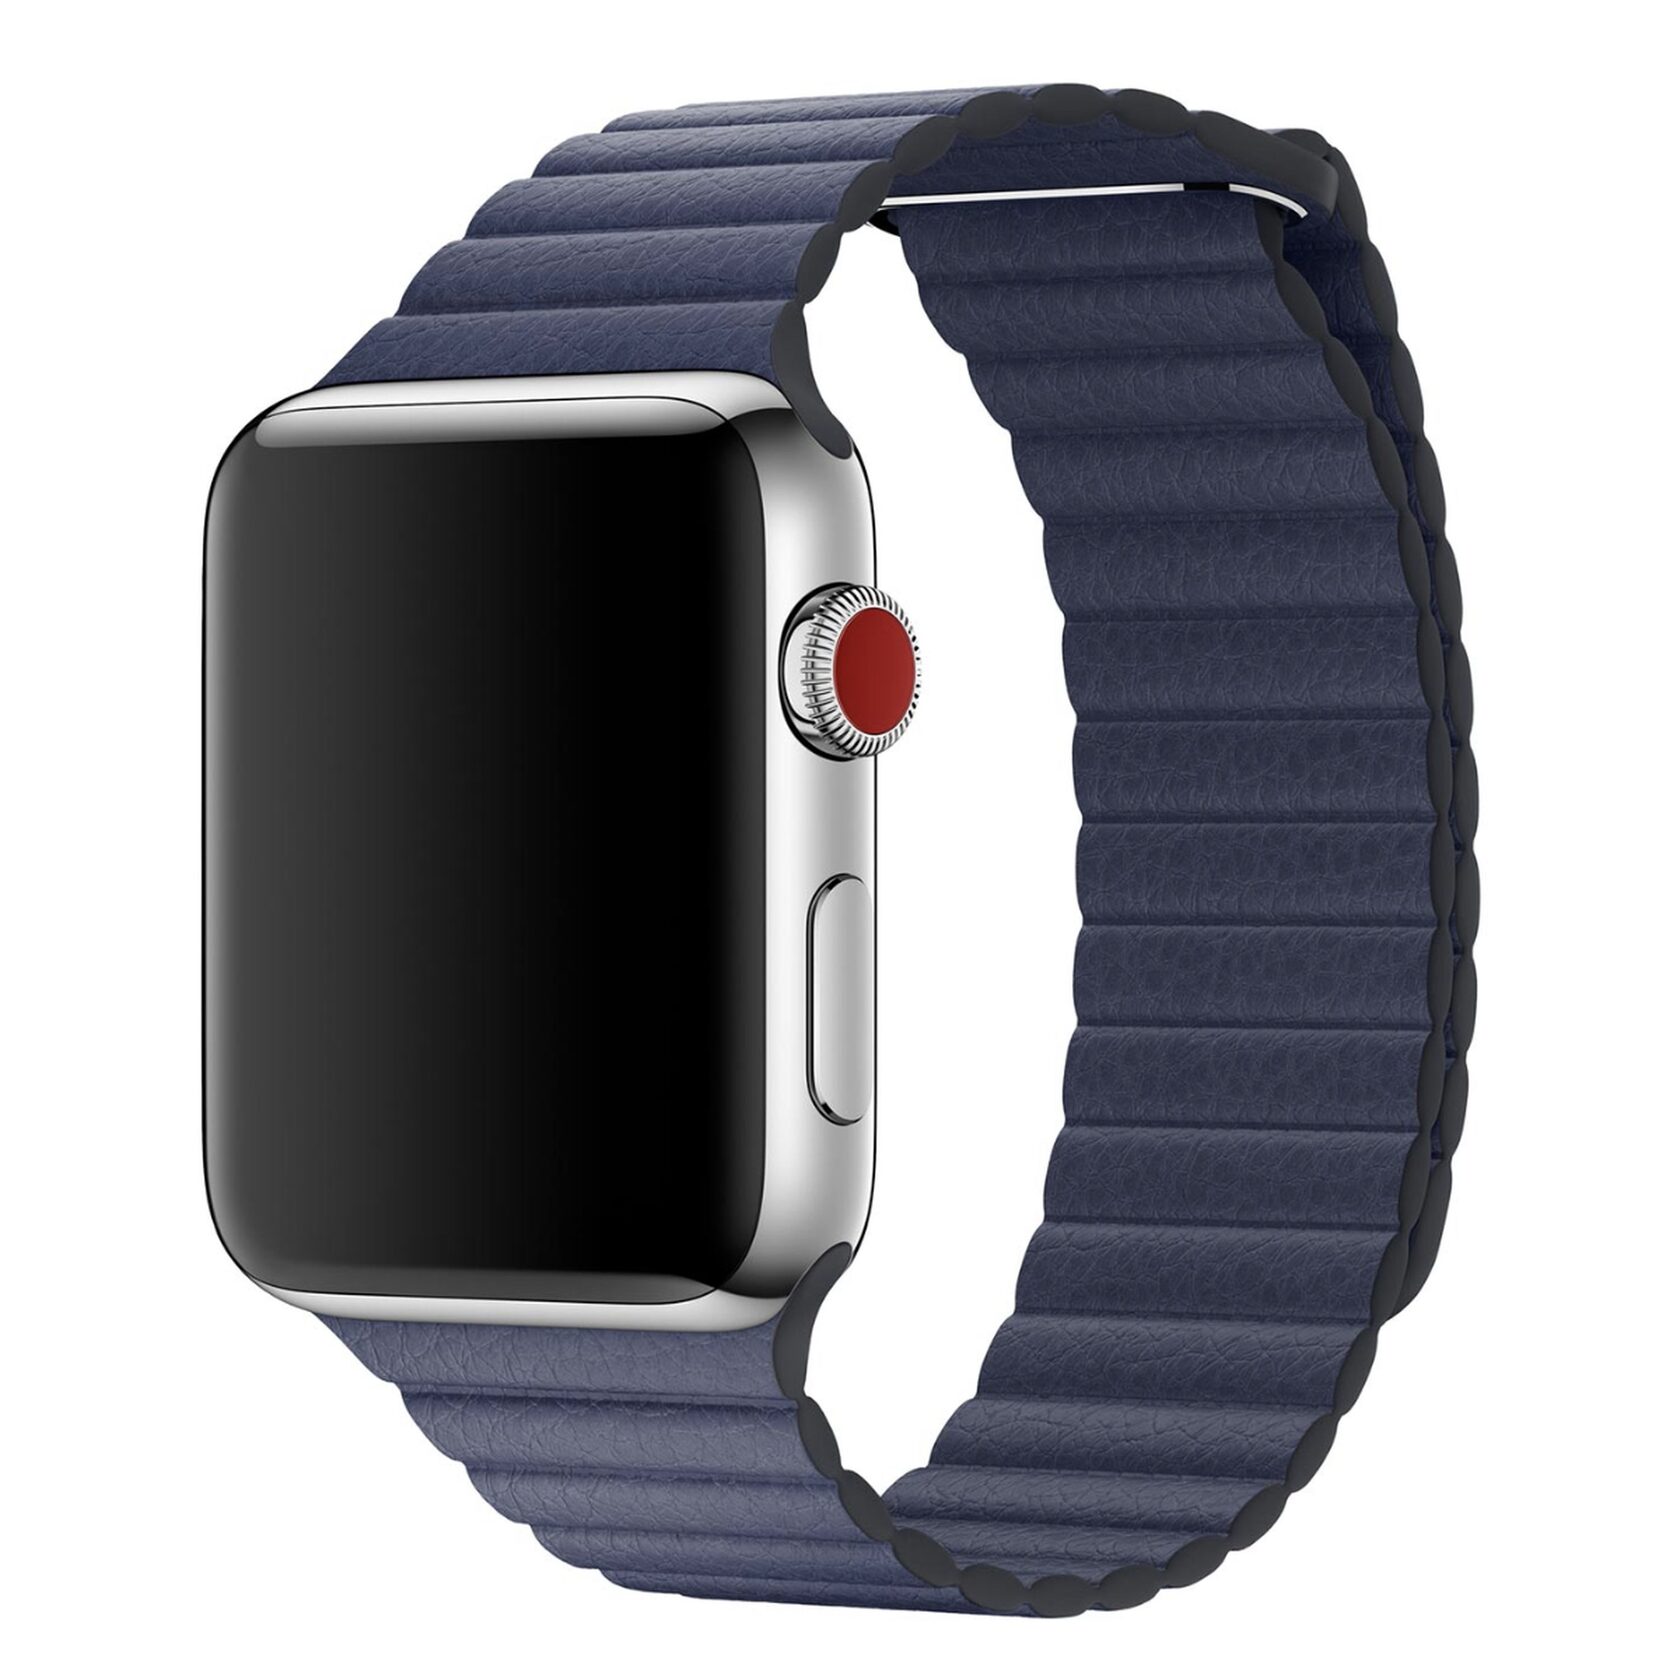 Apple watch ремешок оригинал купить. Ремешок для Apple watch 44mm. Браслет для Apple watch 44mm. Кожаный ремешок для Apple watch 44mm. Ремешок для Эппл вотч 6 44 мм.